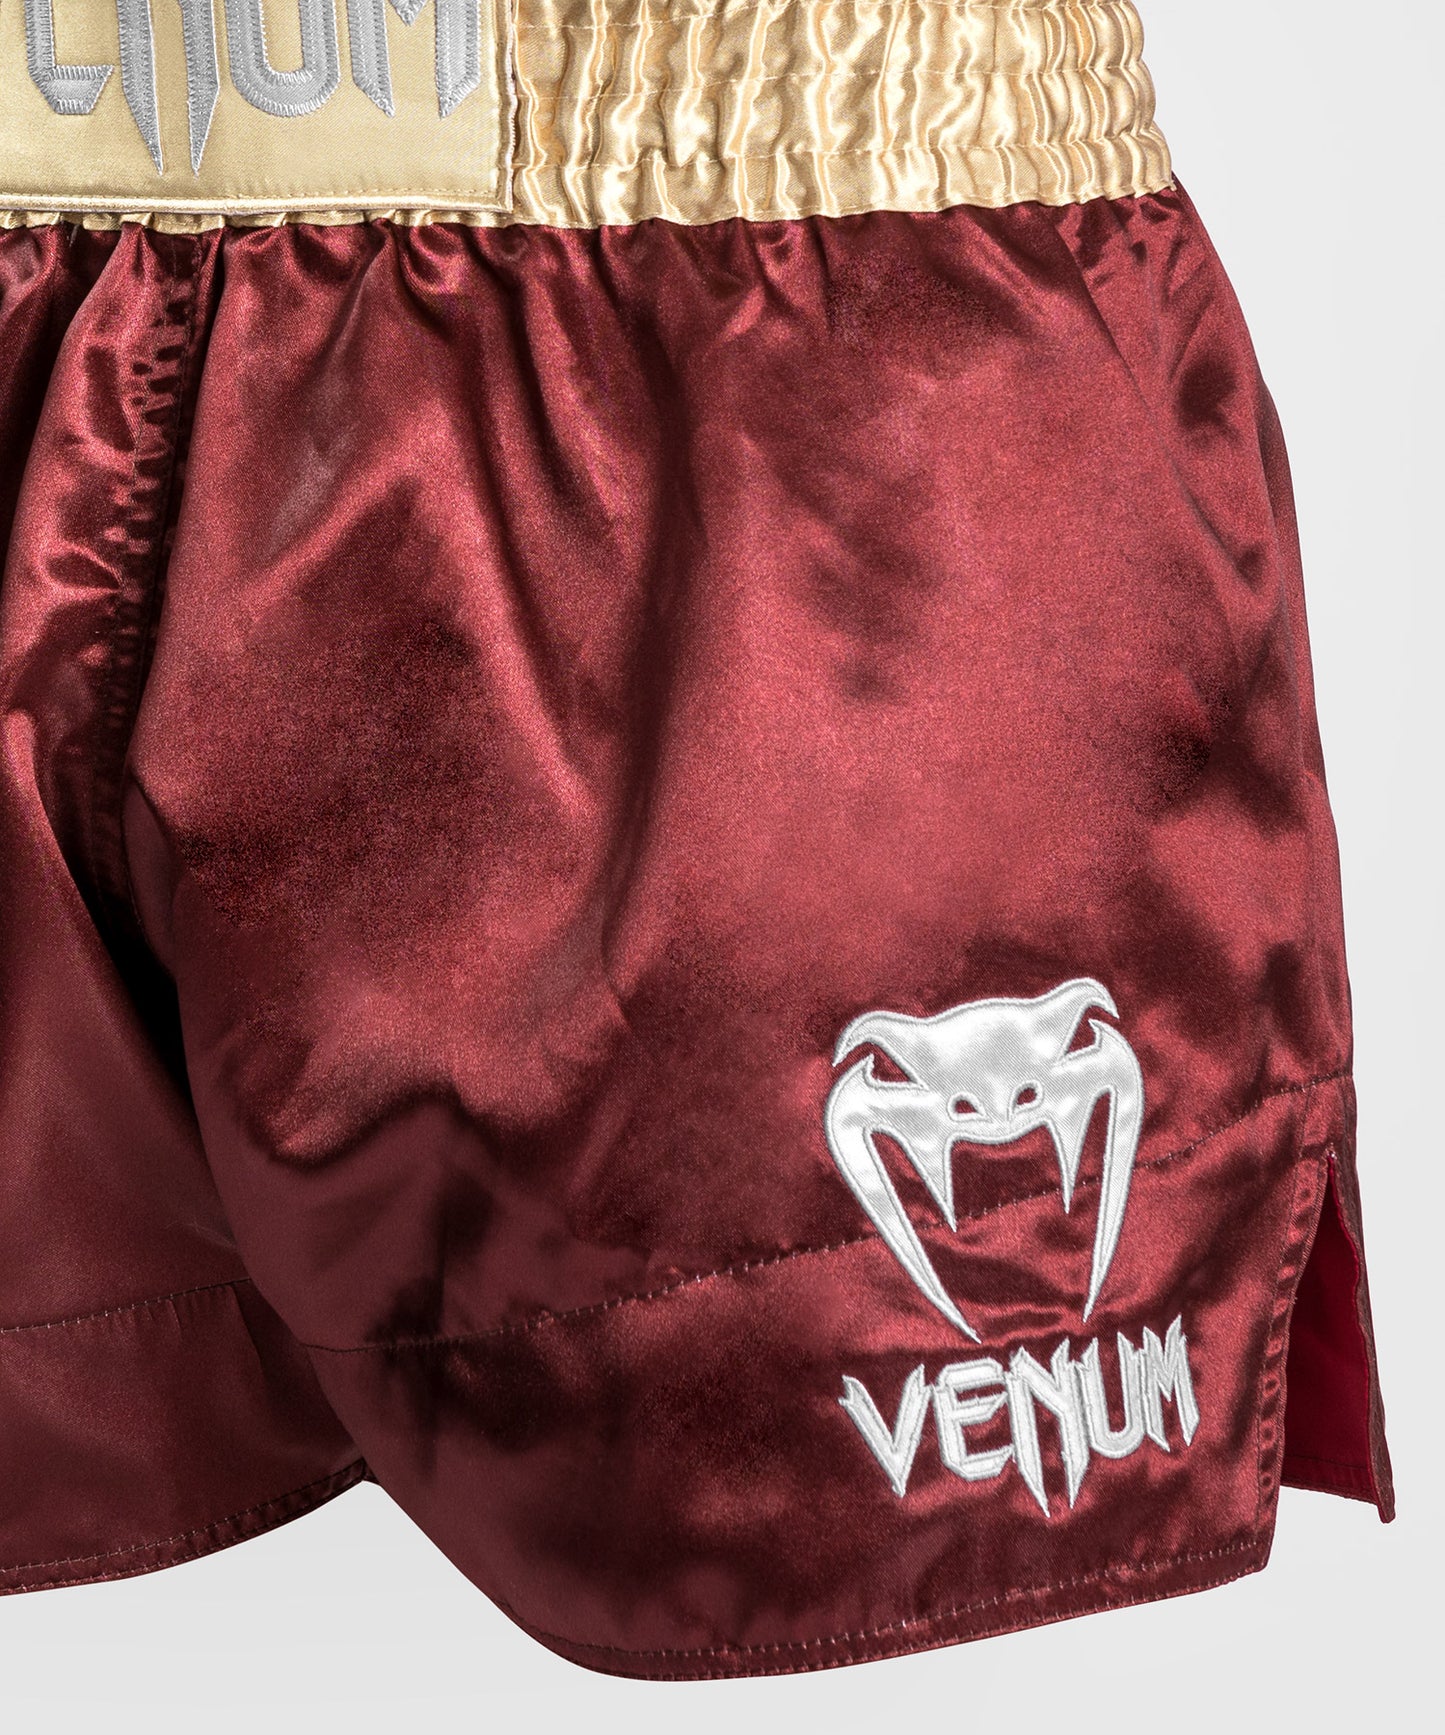 Venum Classic Muay Thai broekje - Bourgondië/Goud/Wit